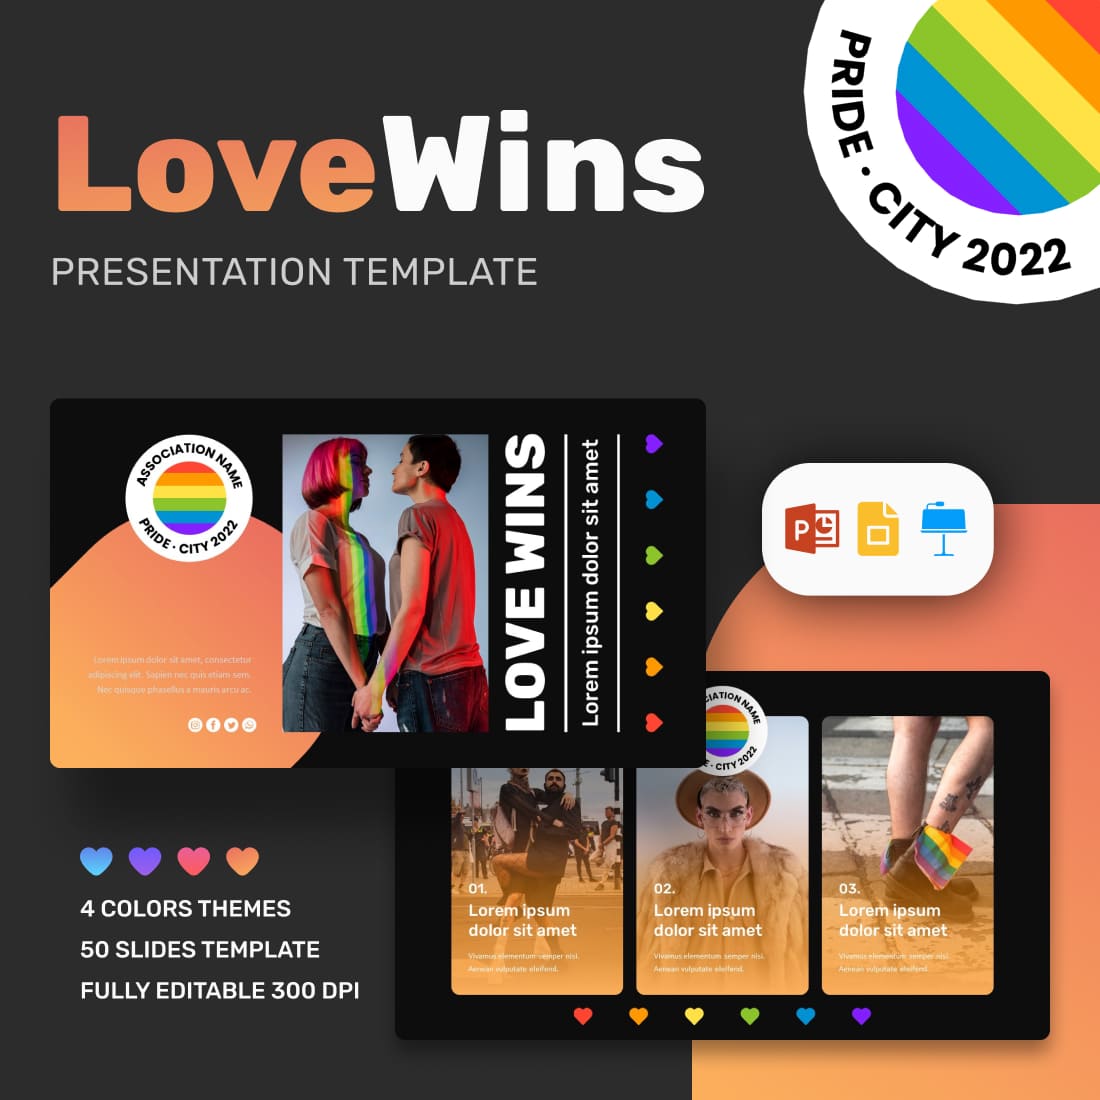 Love Wins LGBT Presentation Template.